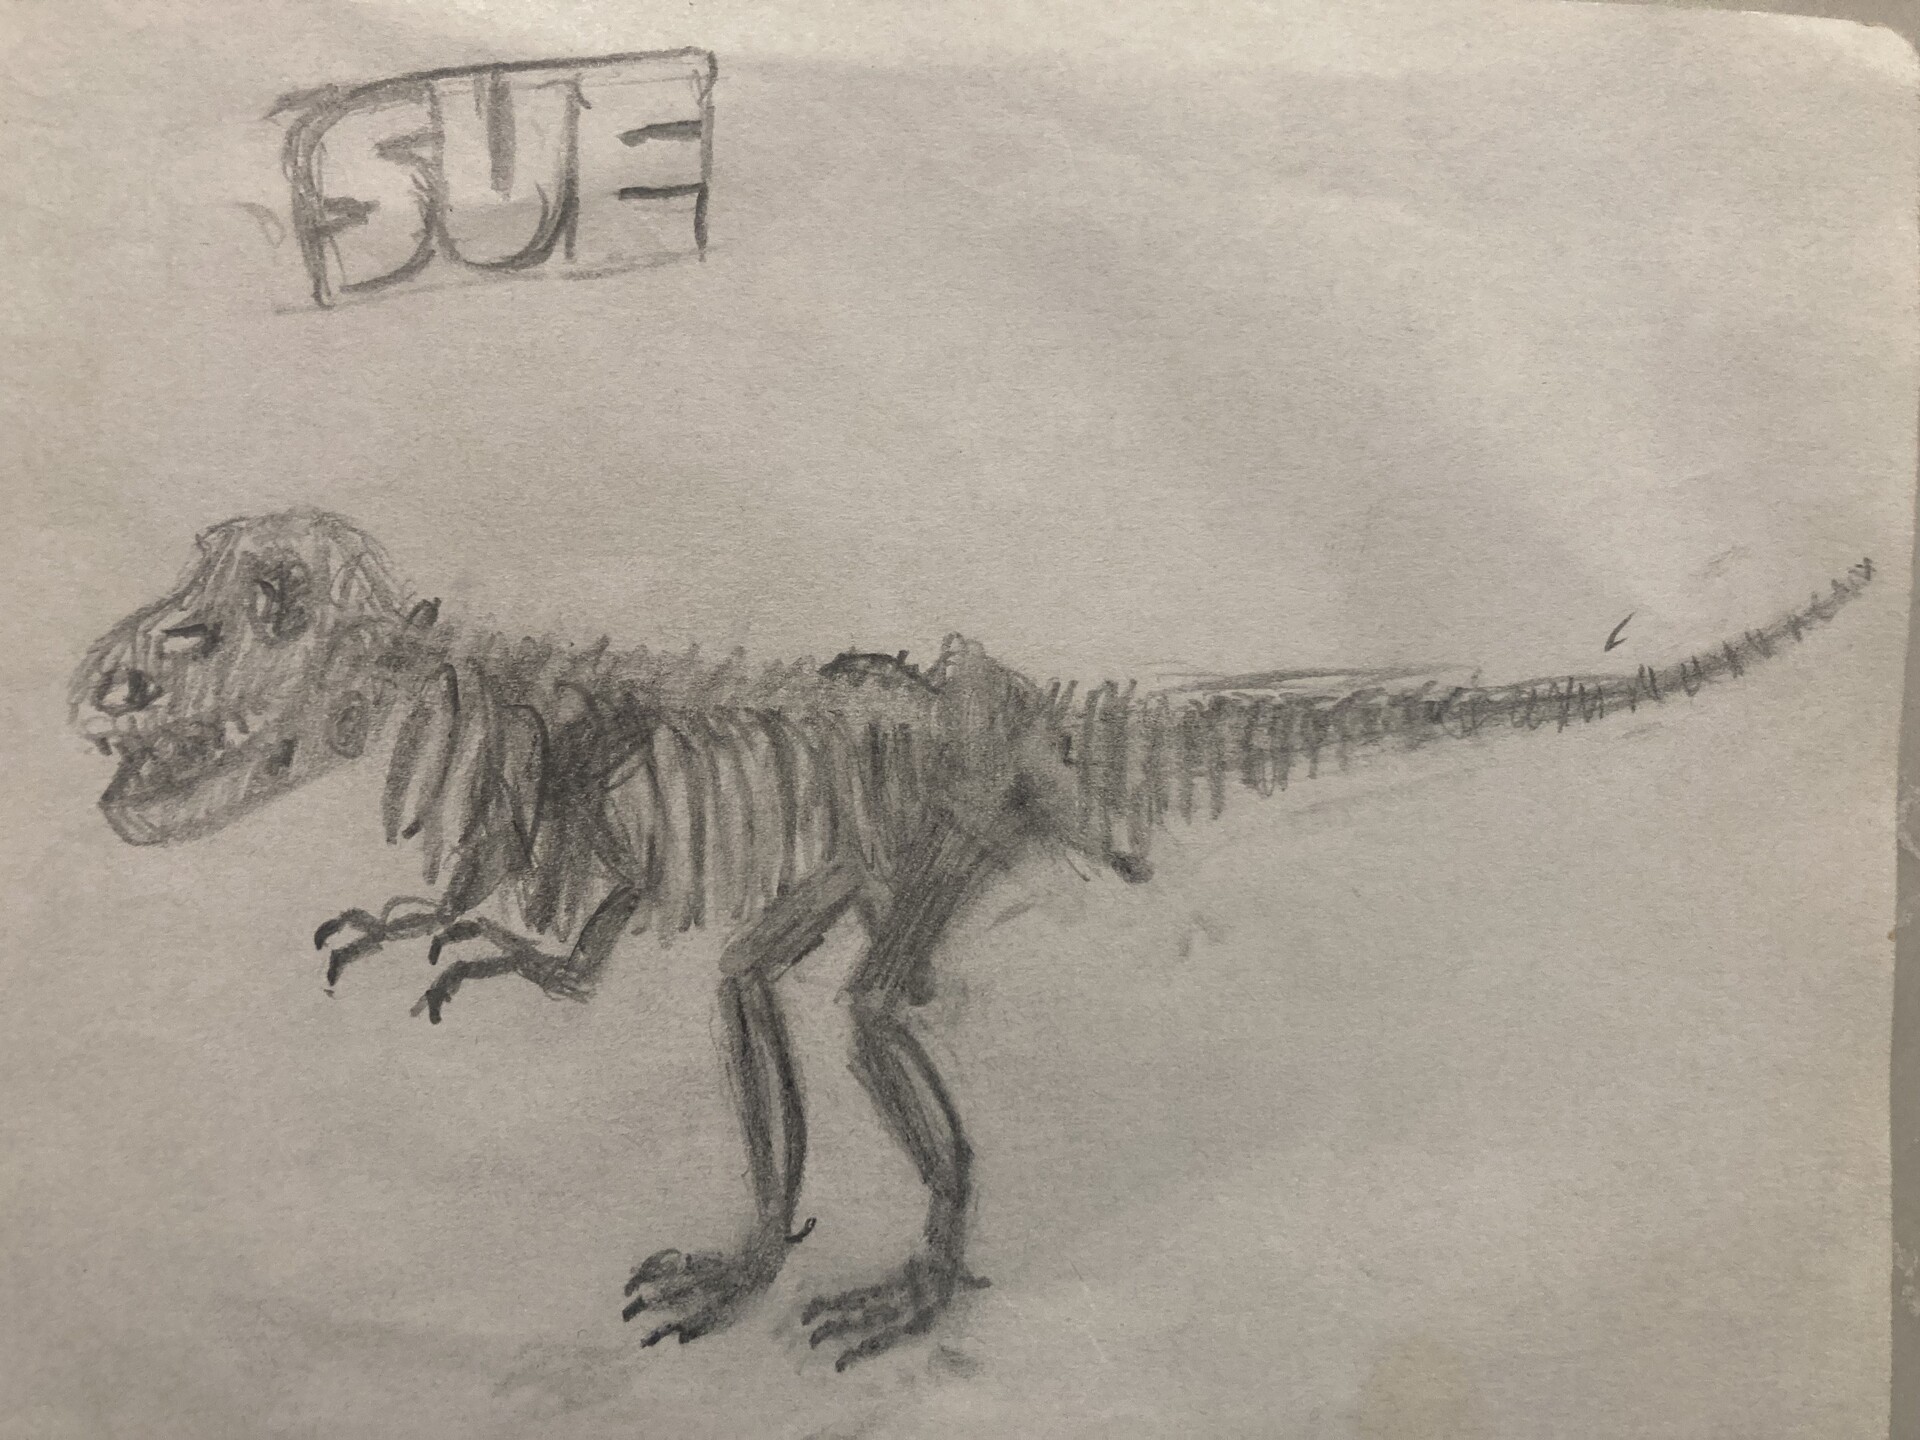 ArtStation - Charcoal drawing of a Tyrannosaurus Rex